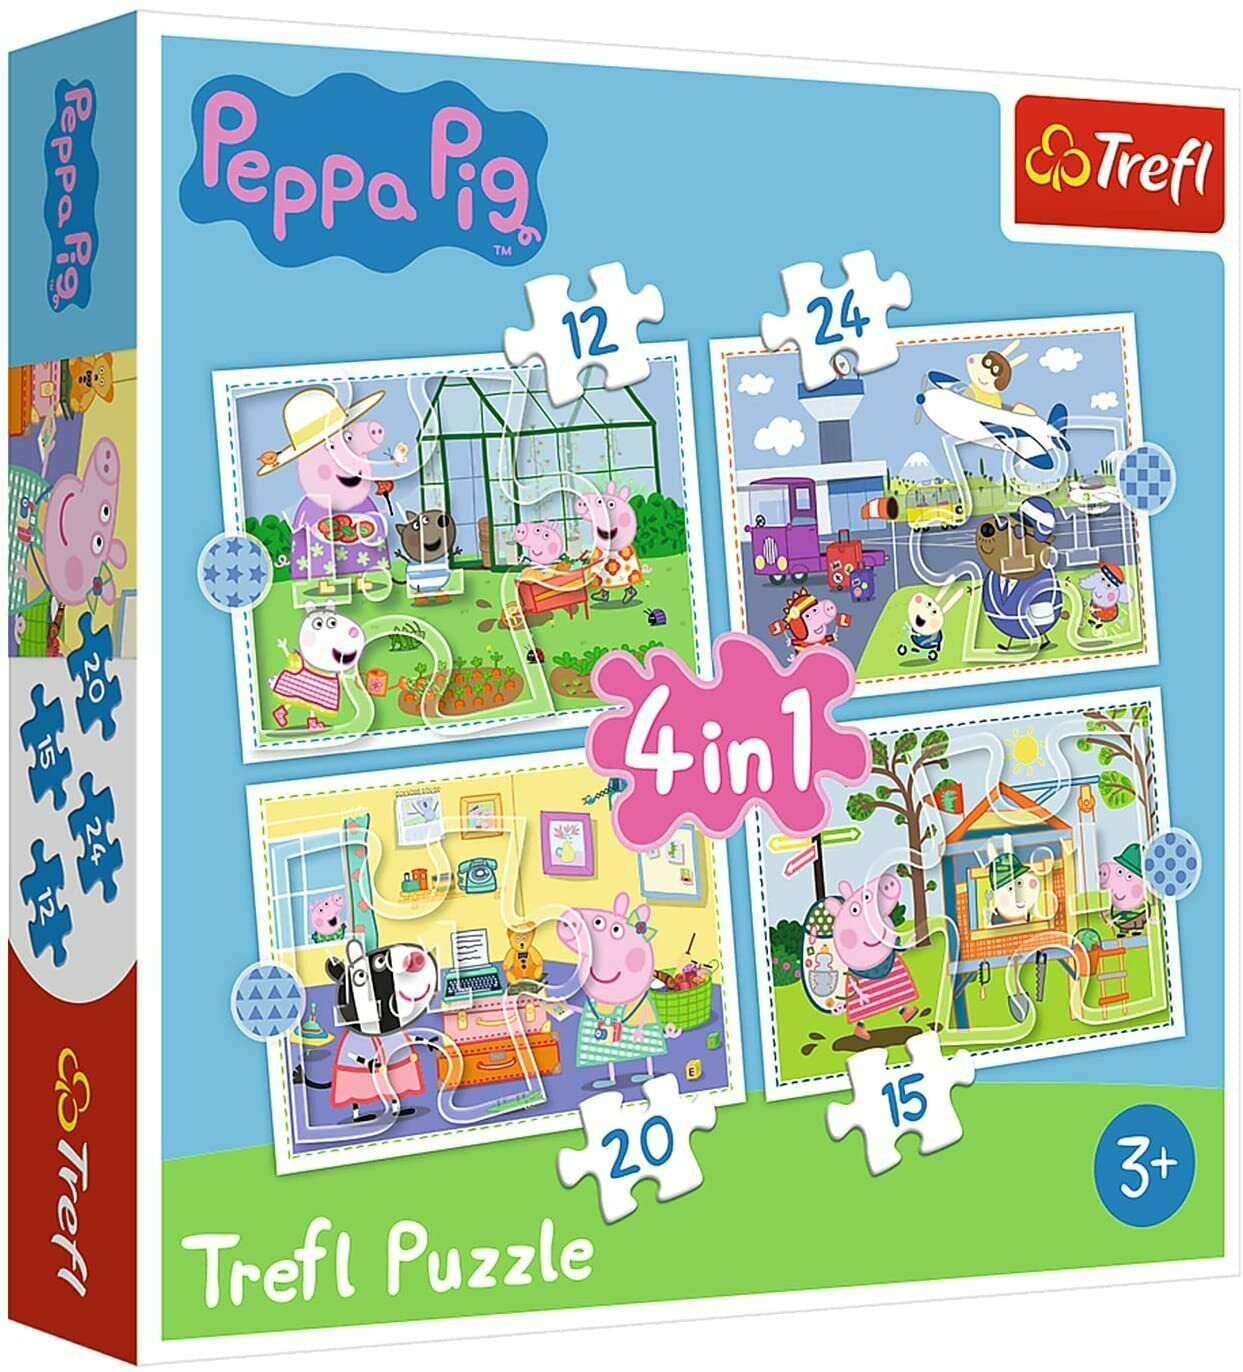 TREFL Peppa Pig 4 in 1 Puzzle